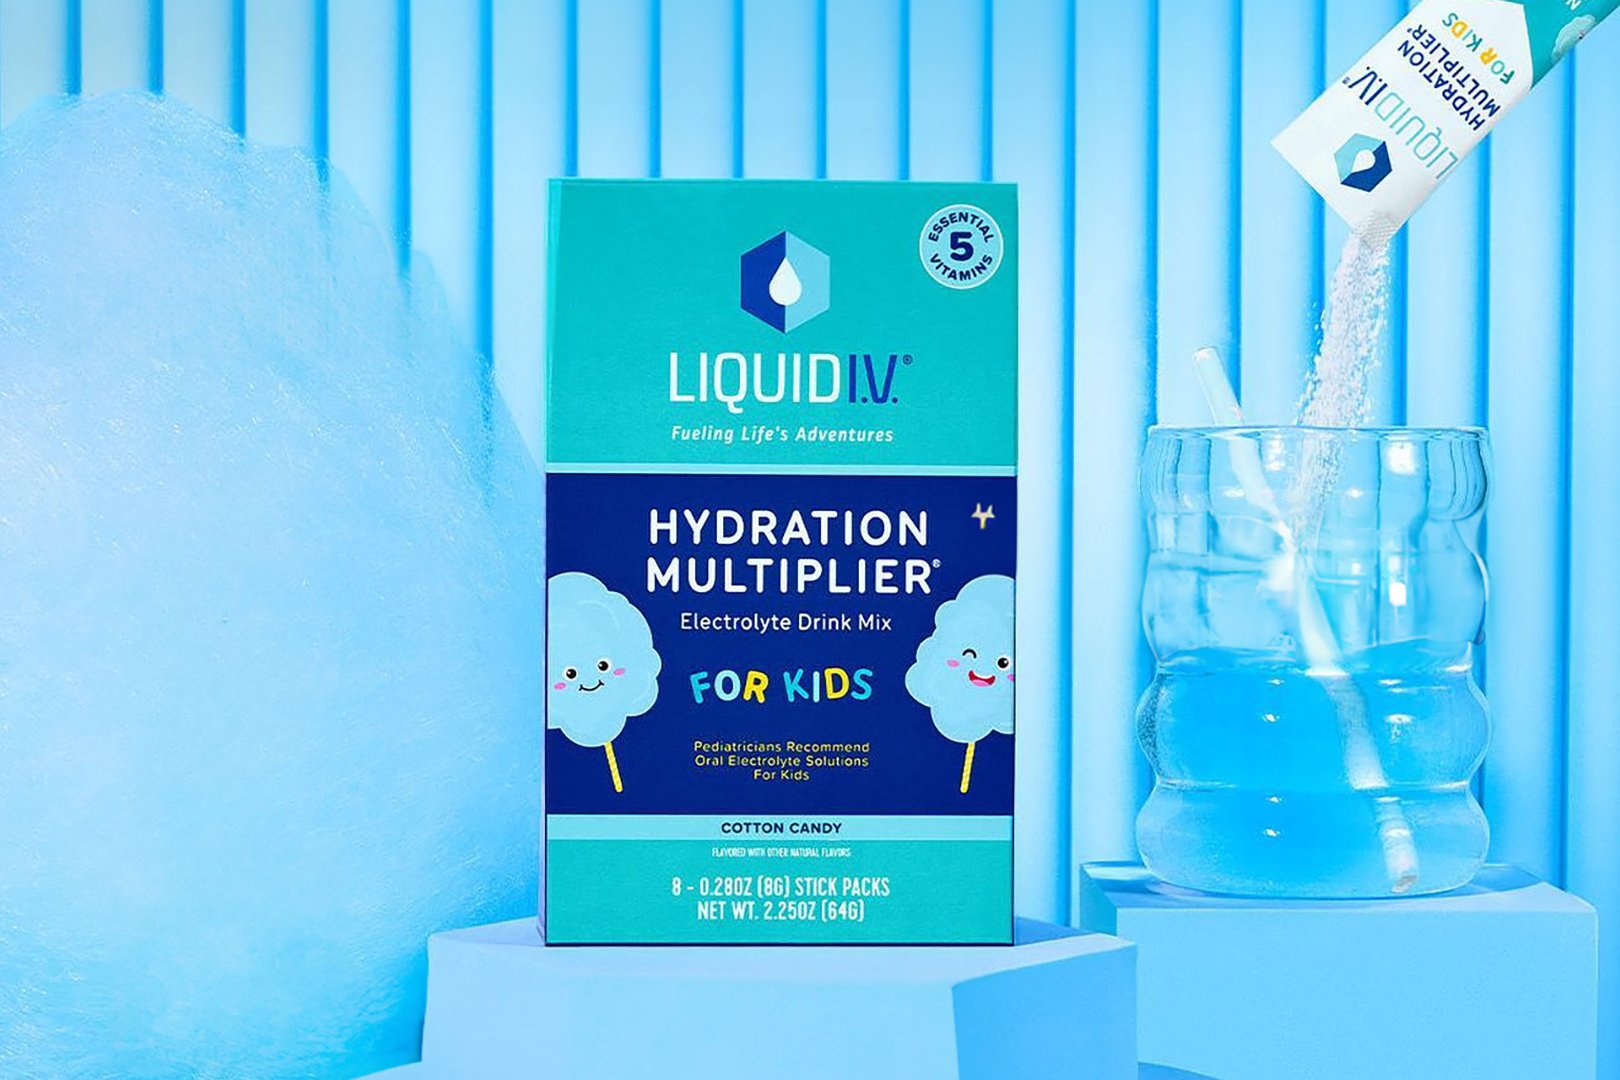 Liquid Iv Hydration Multiplier For Kids